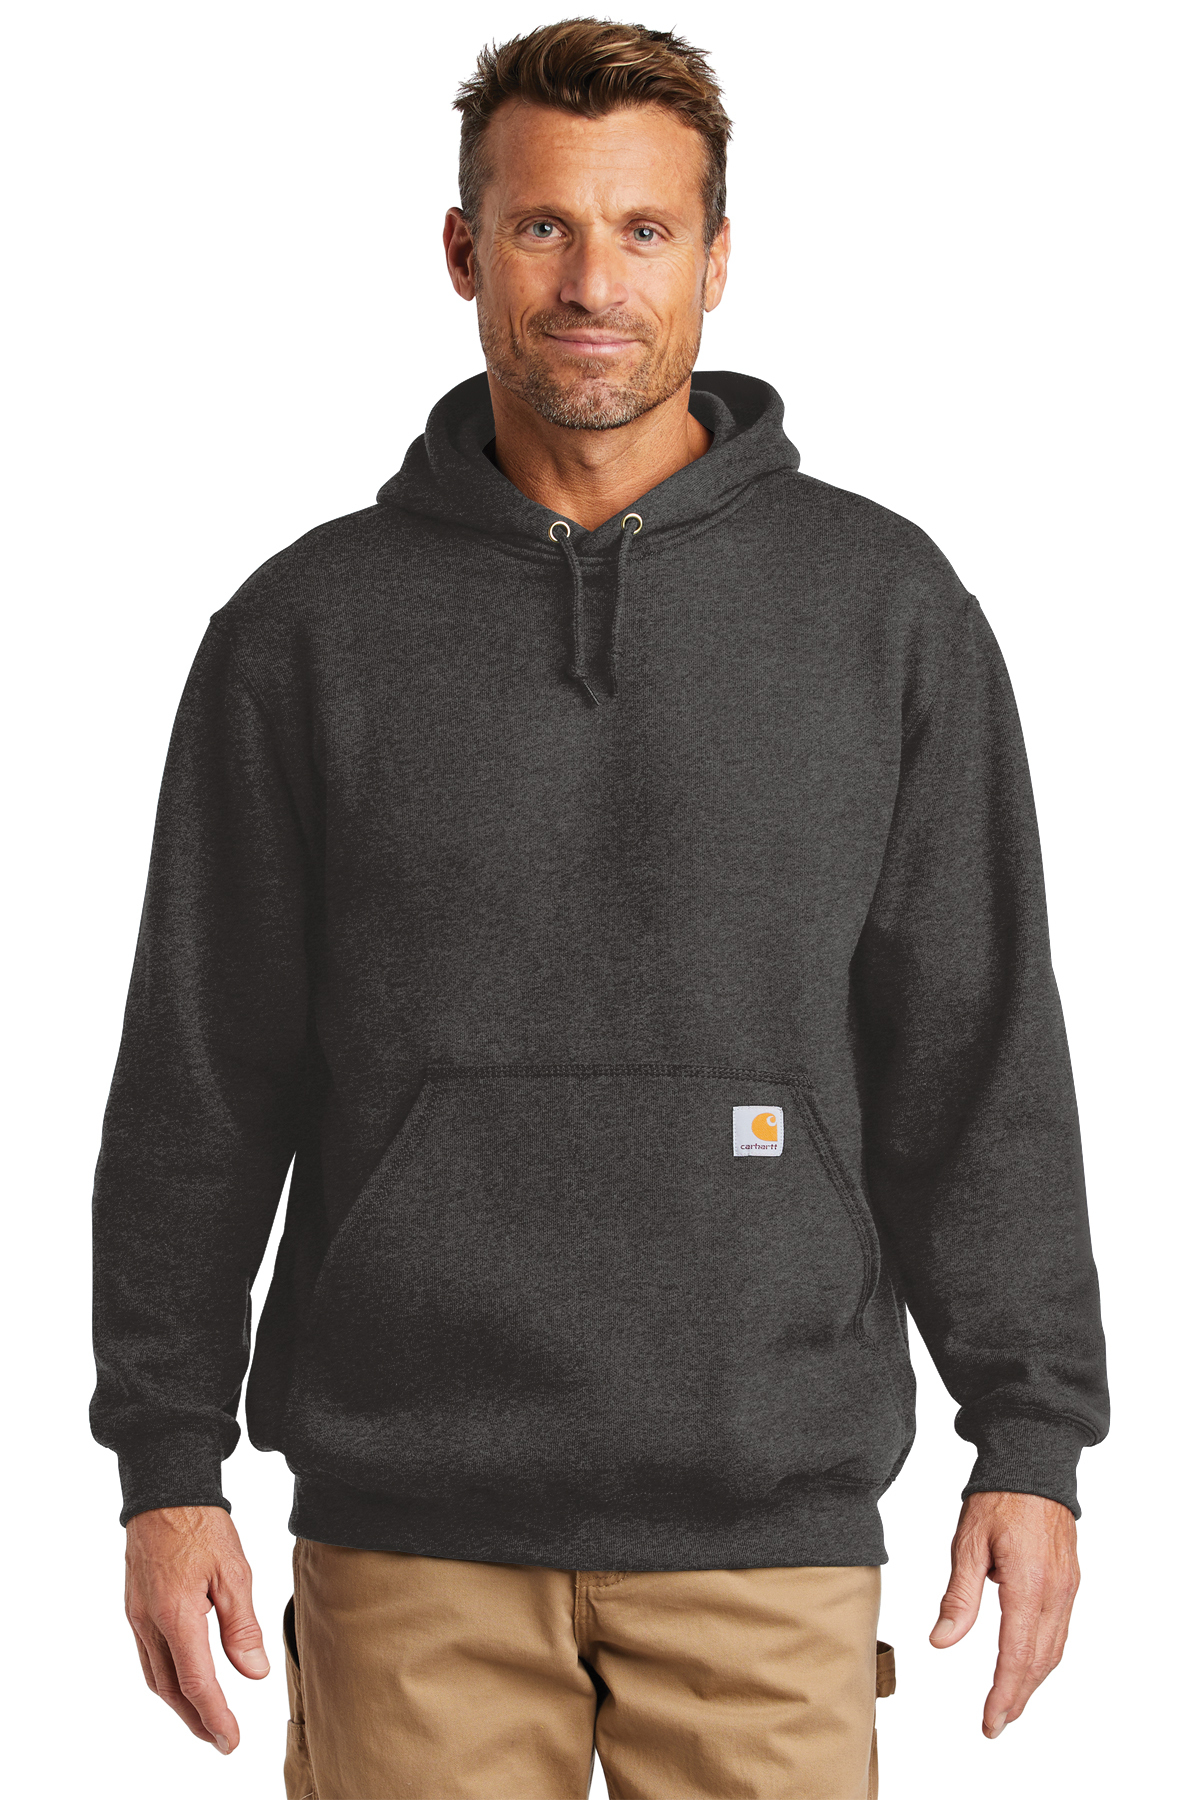 Carhartt Tall Midweight Hooded Sweatshirt | Product | SanMar